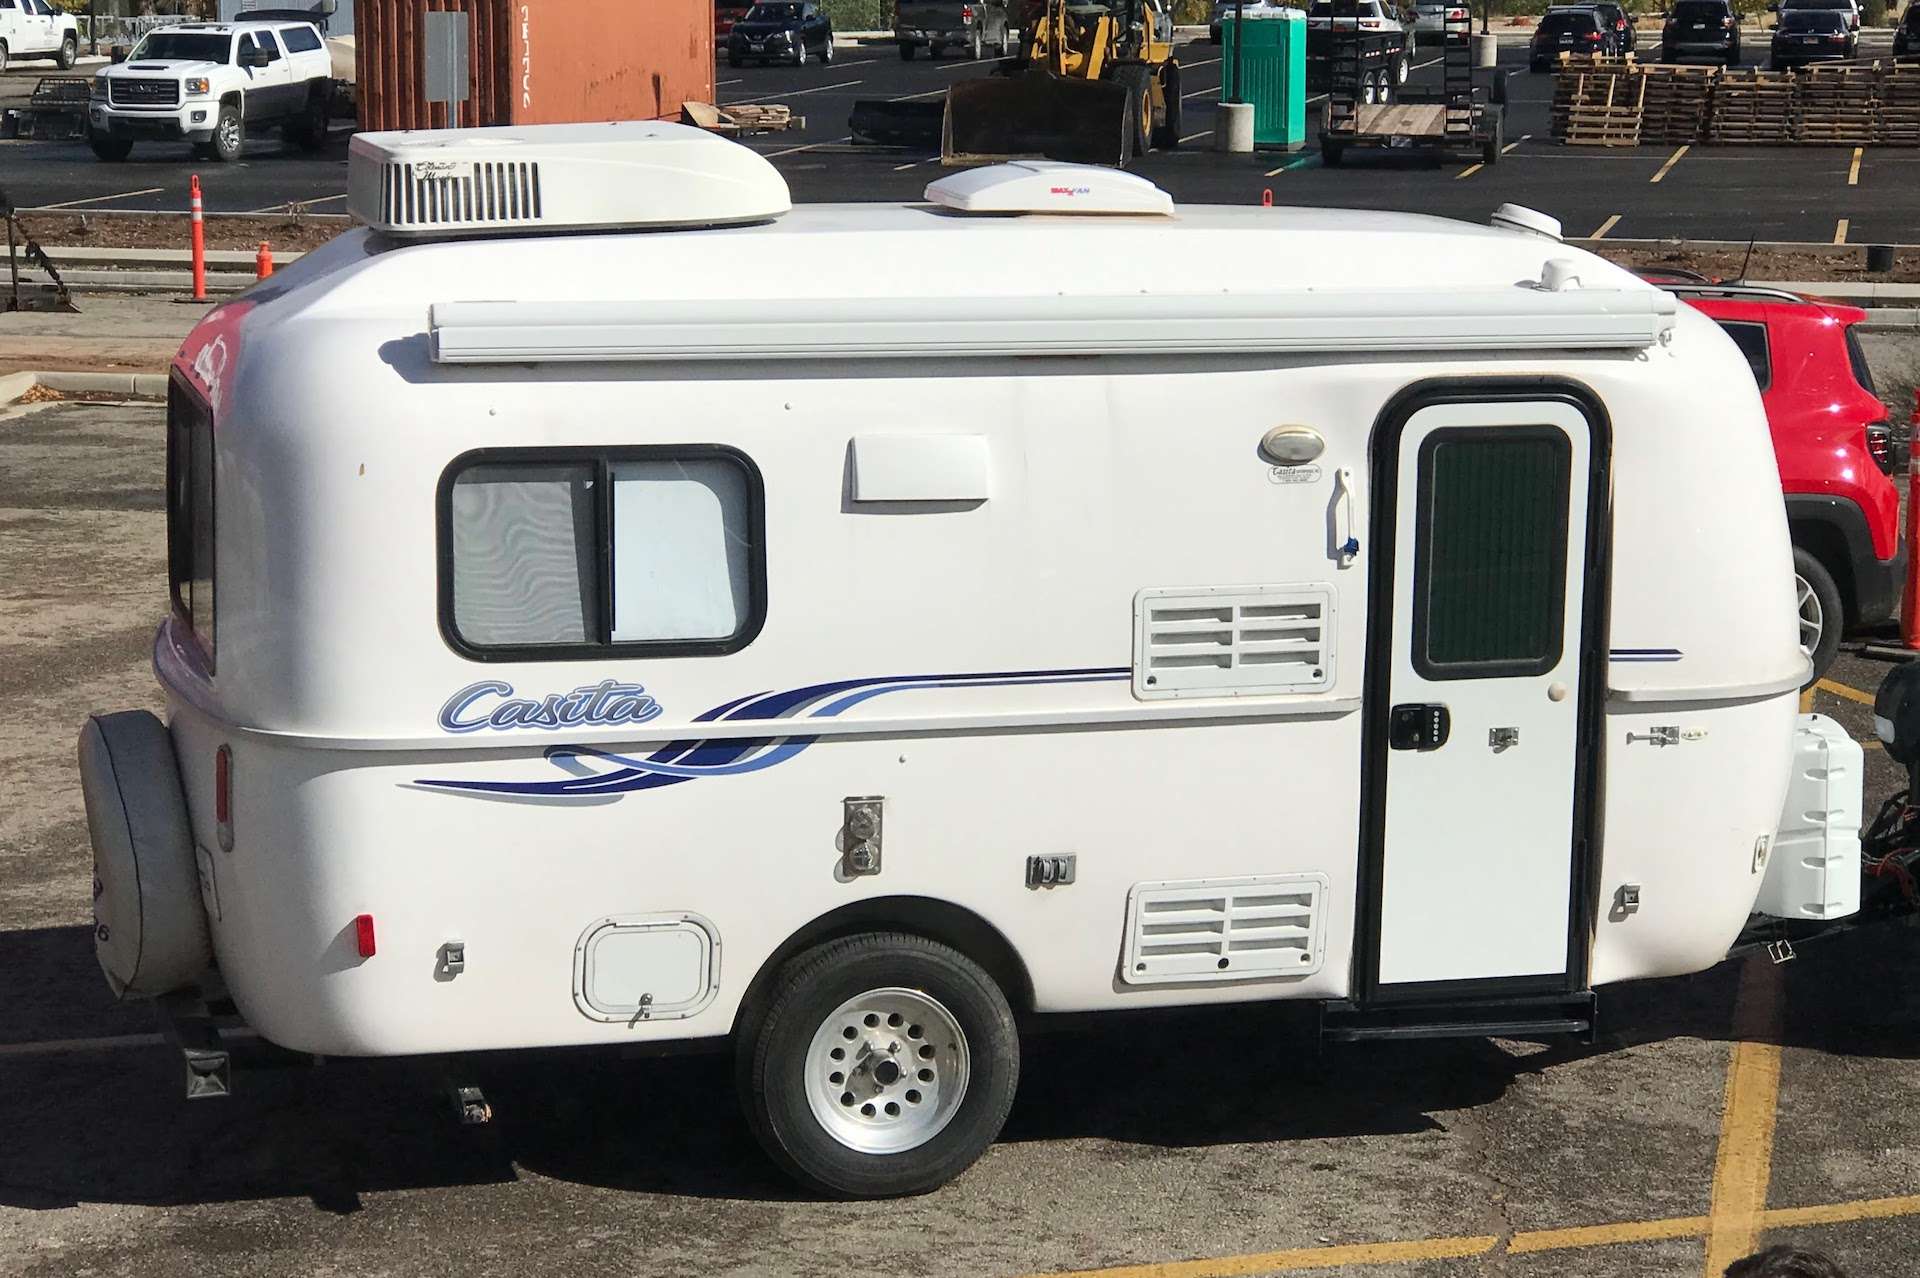 casita travel trailer in parking lot